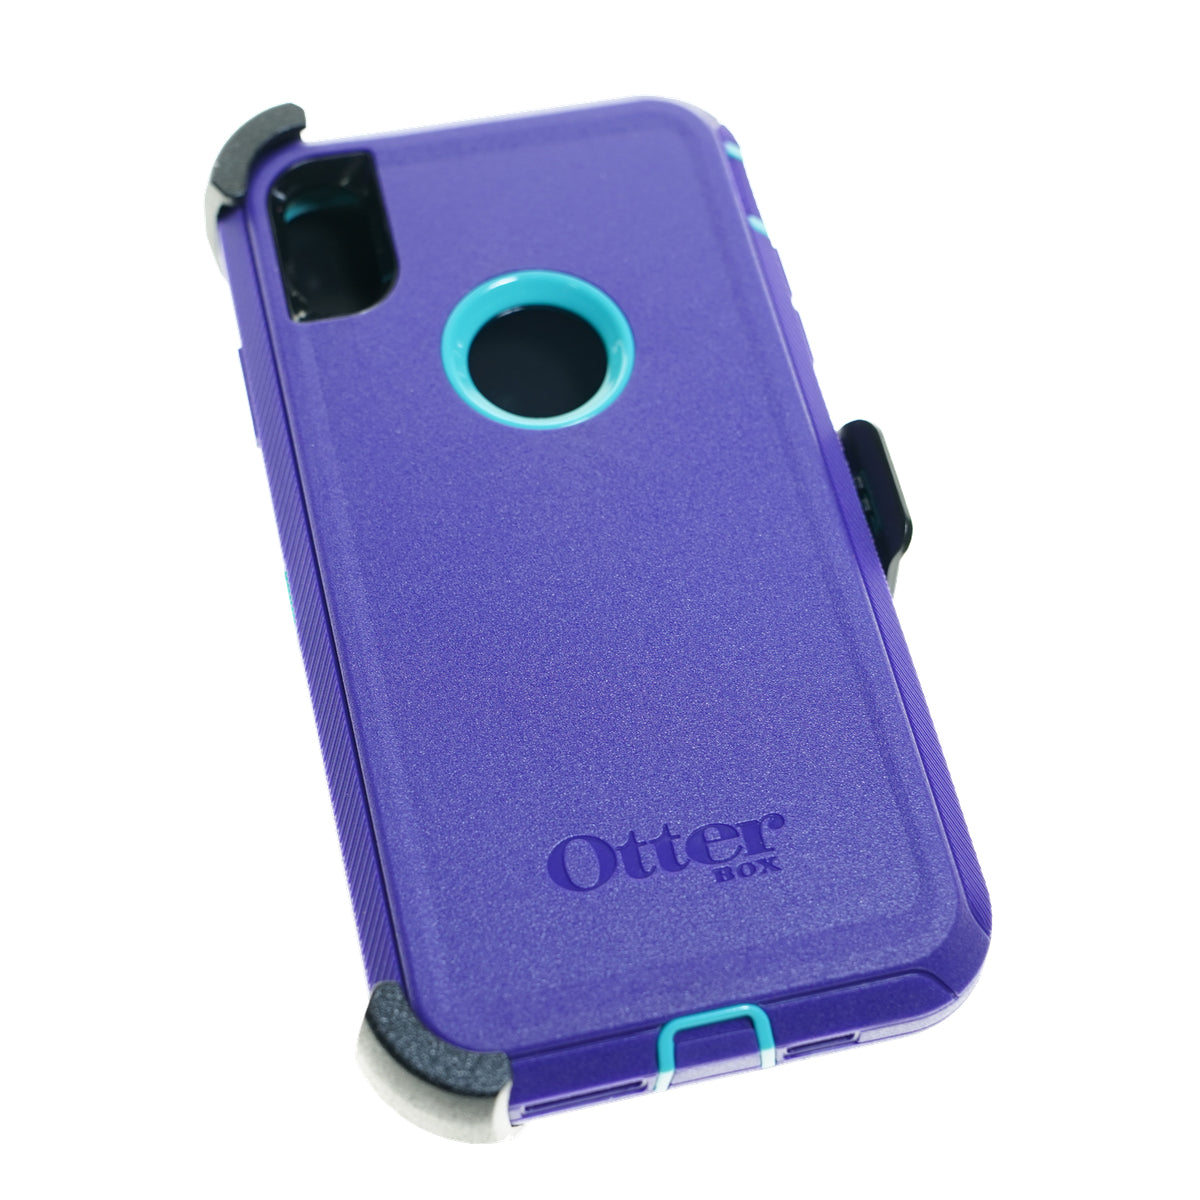 estuches proteccion otterbox defender apple iphone xs max color morado / turquesa